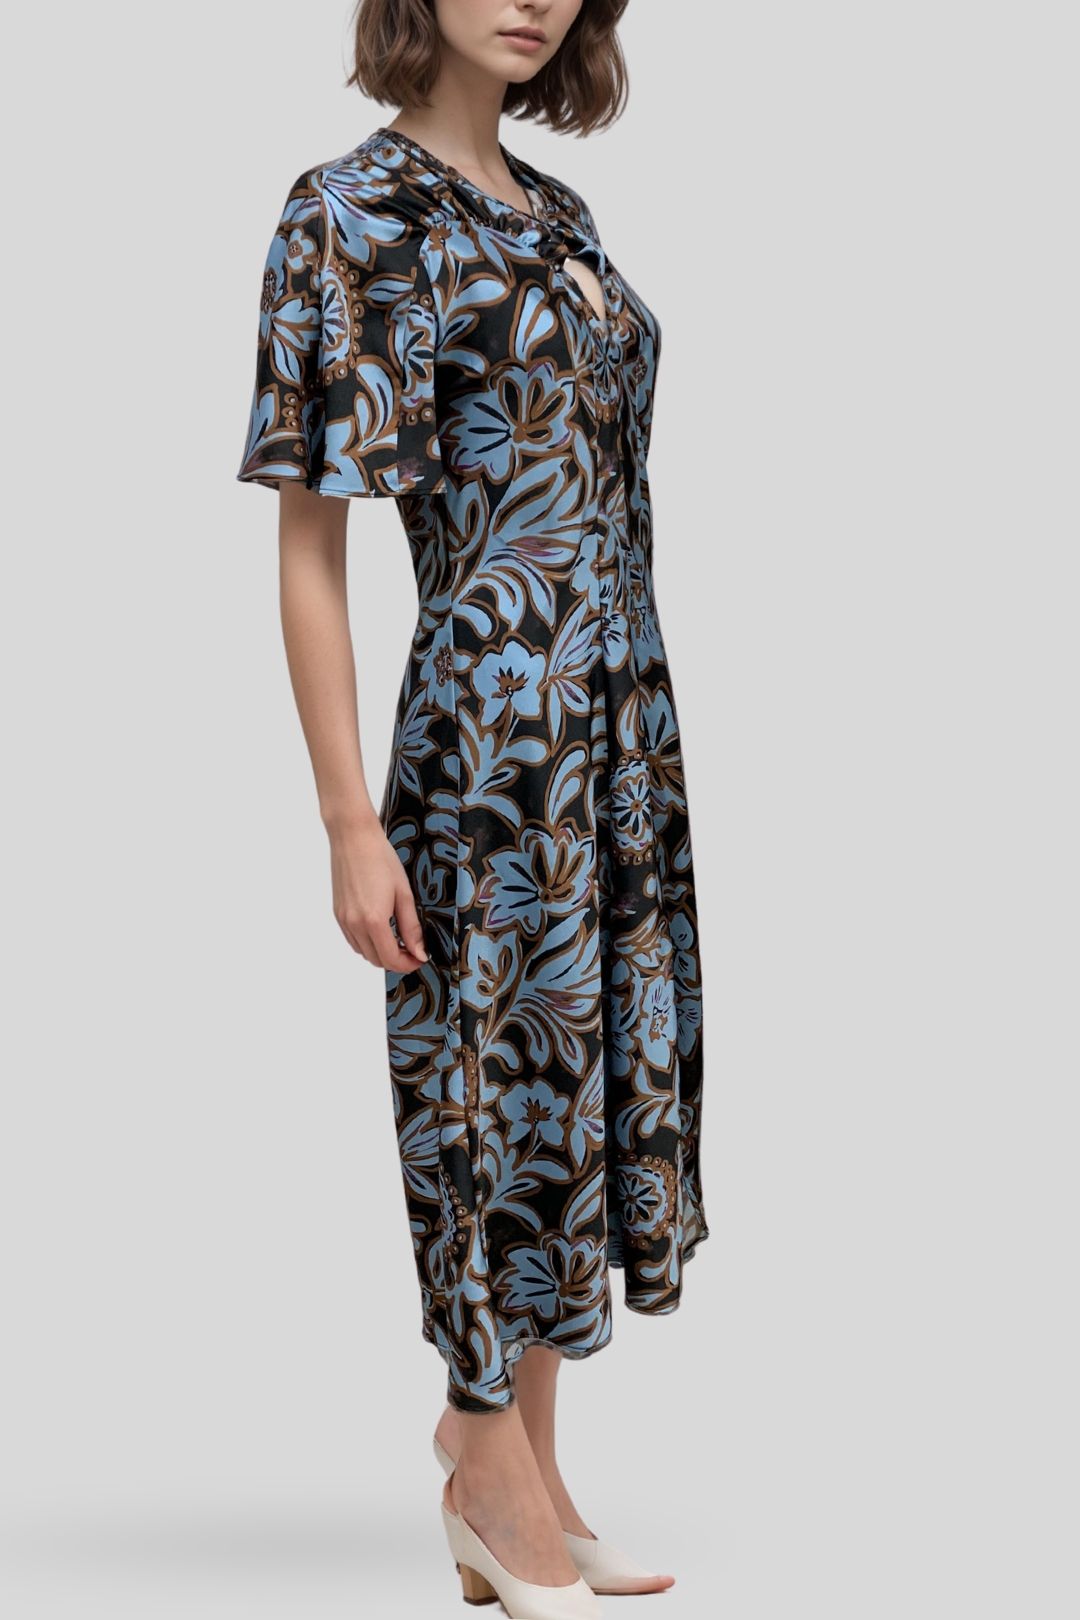 Veronika Maine Round Neck Midi Dress in Floral Print